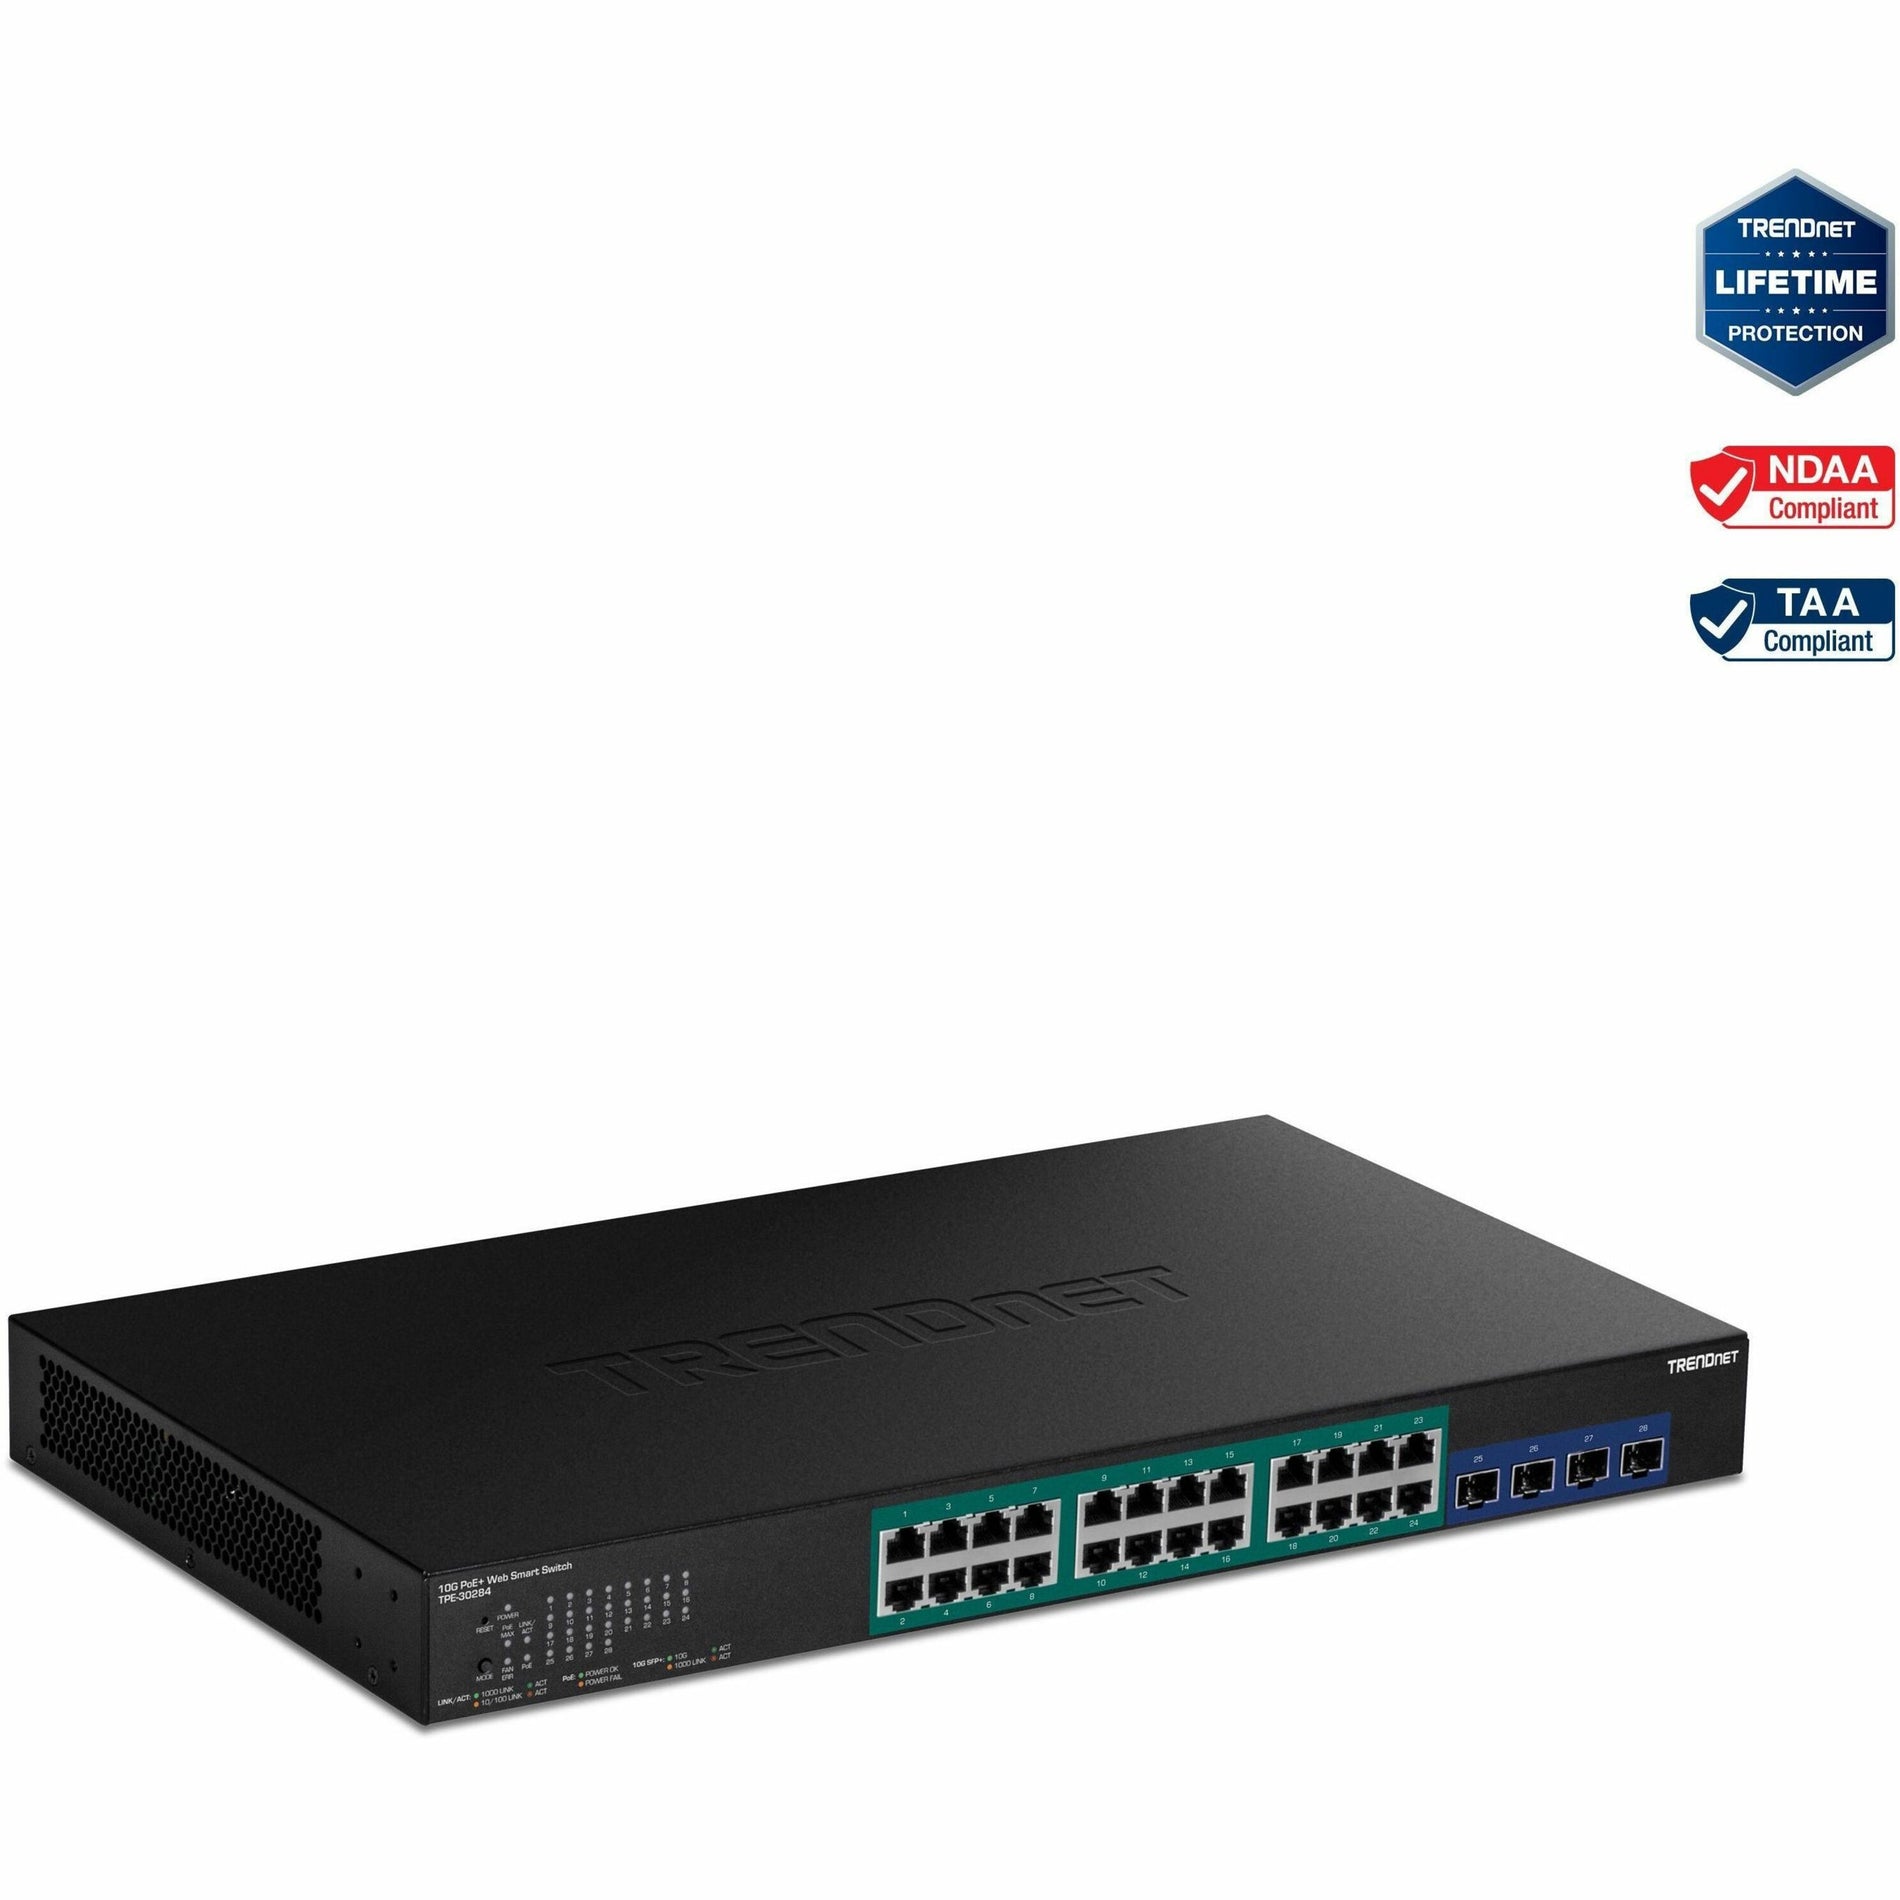 TRENDnet TPE-30284 28-Port Gigabit Web Smart PoE+ Switch with 10G SFP+ Slots, VLAN, QoS, LACP